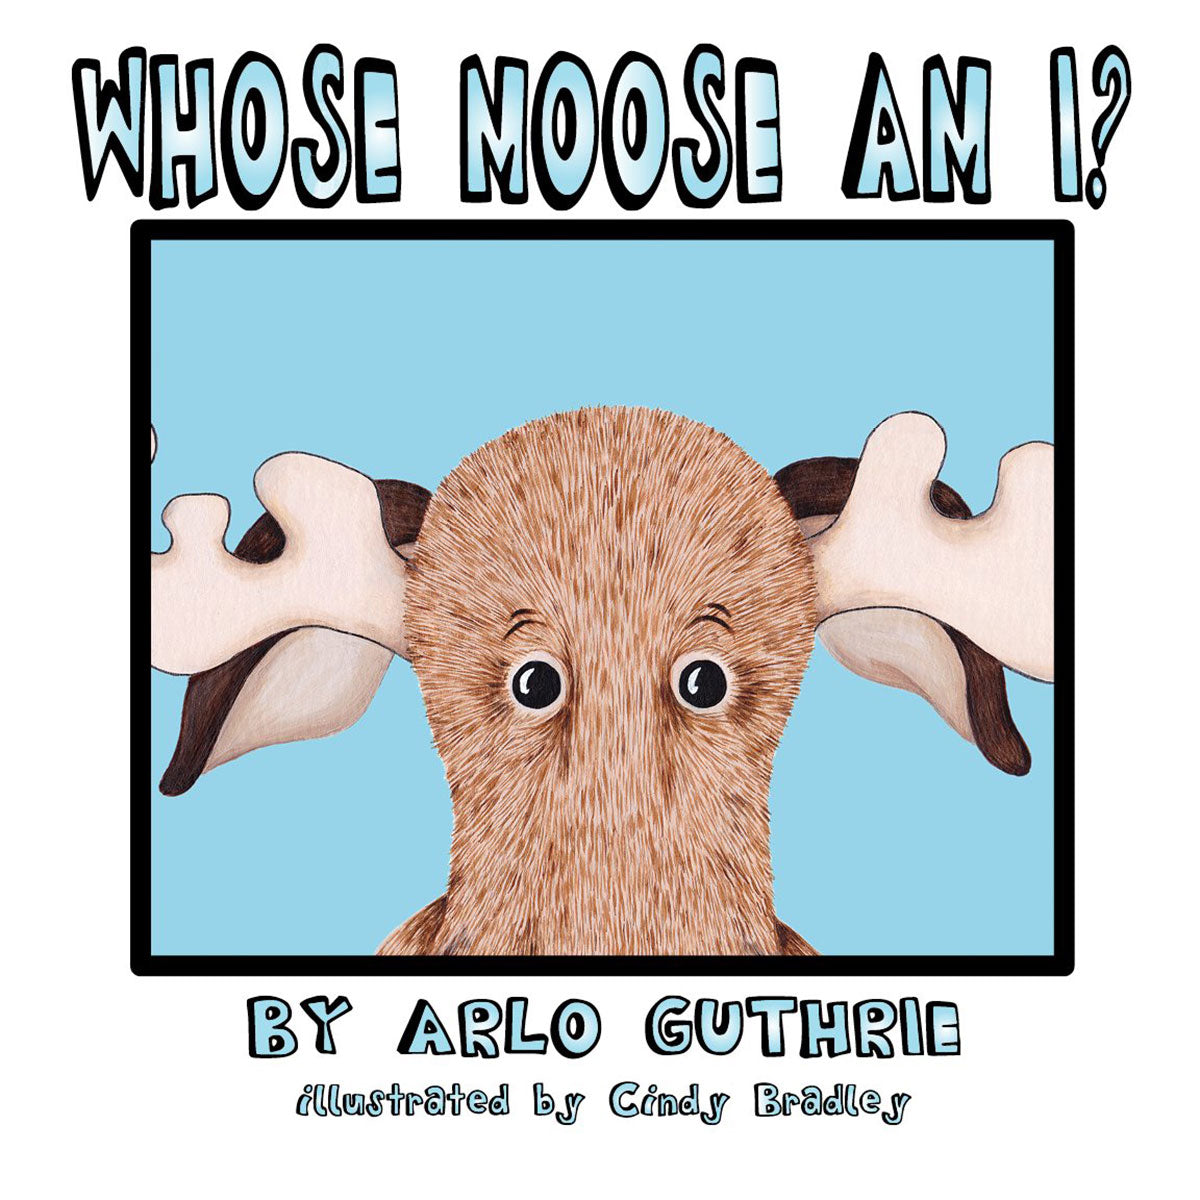 Whose Moose am I?